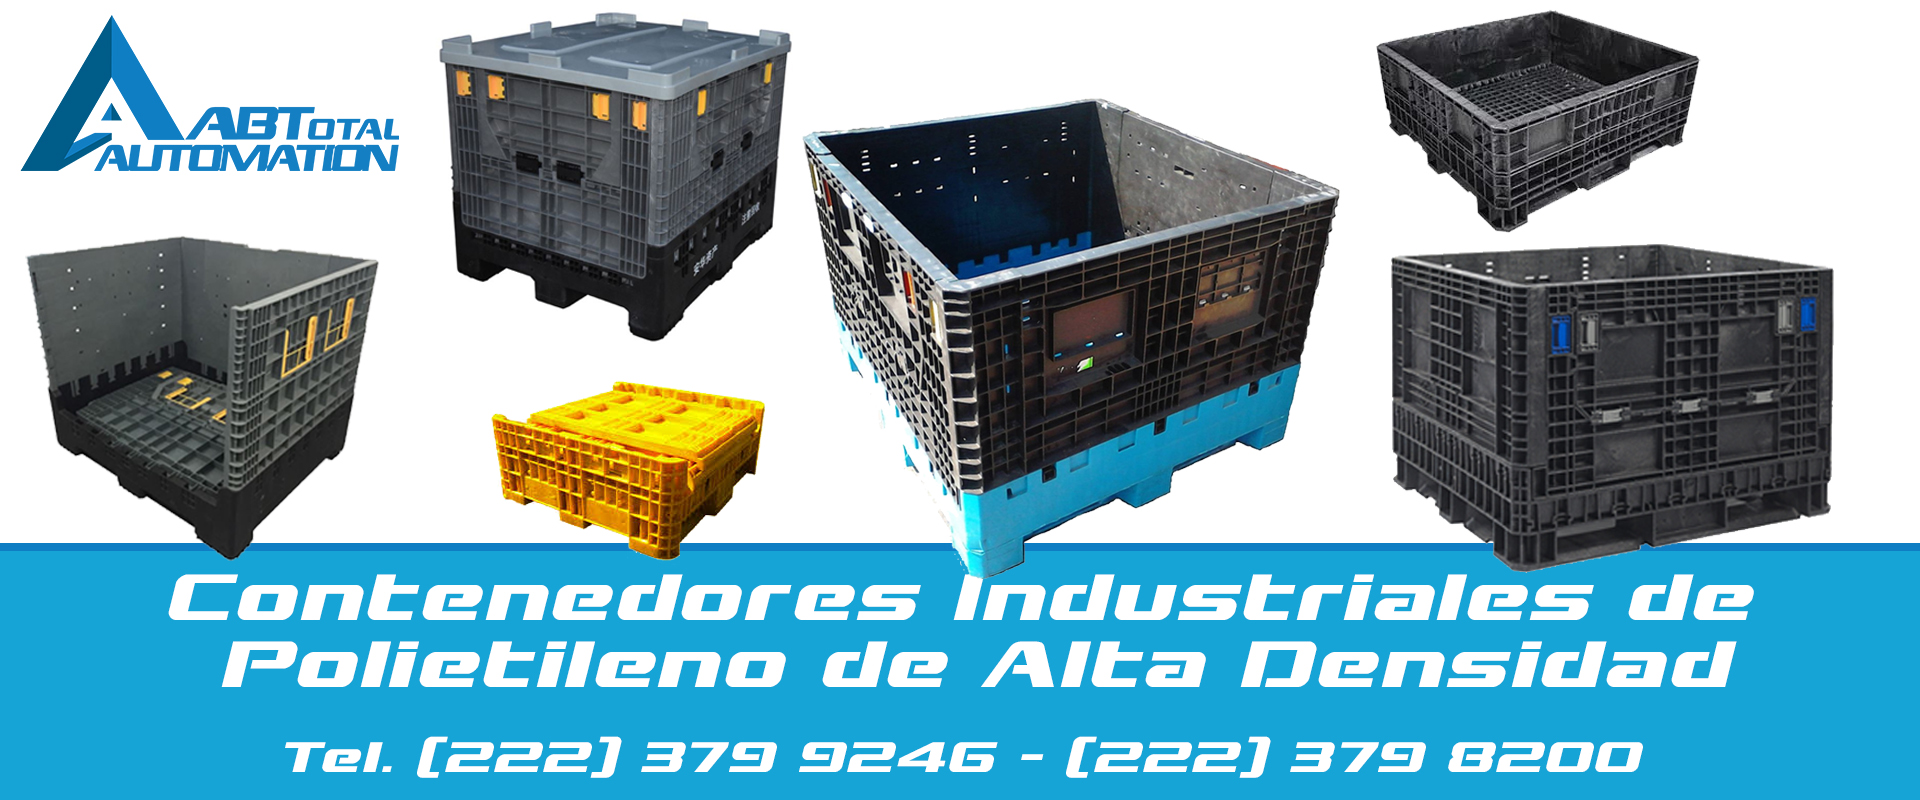 Sell & Repair of Industrial Folding Containers on Puebla QUERÉTARO México Tlaxcala